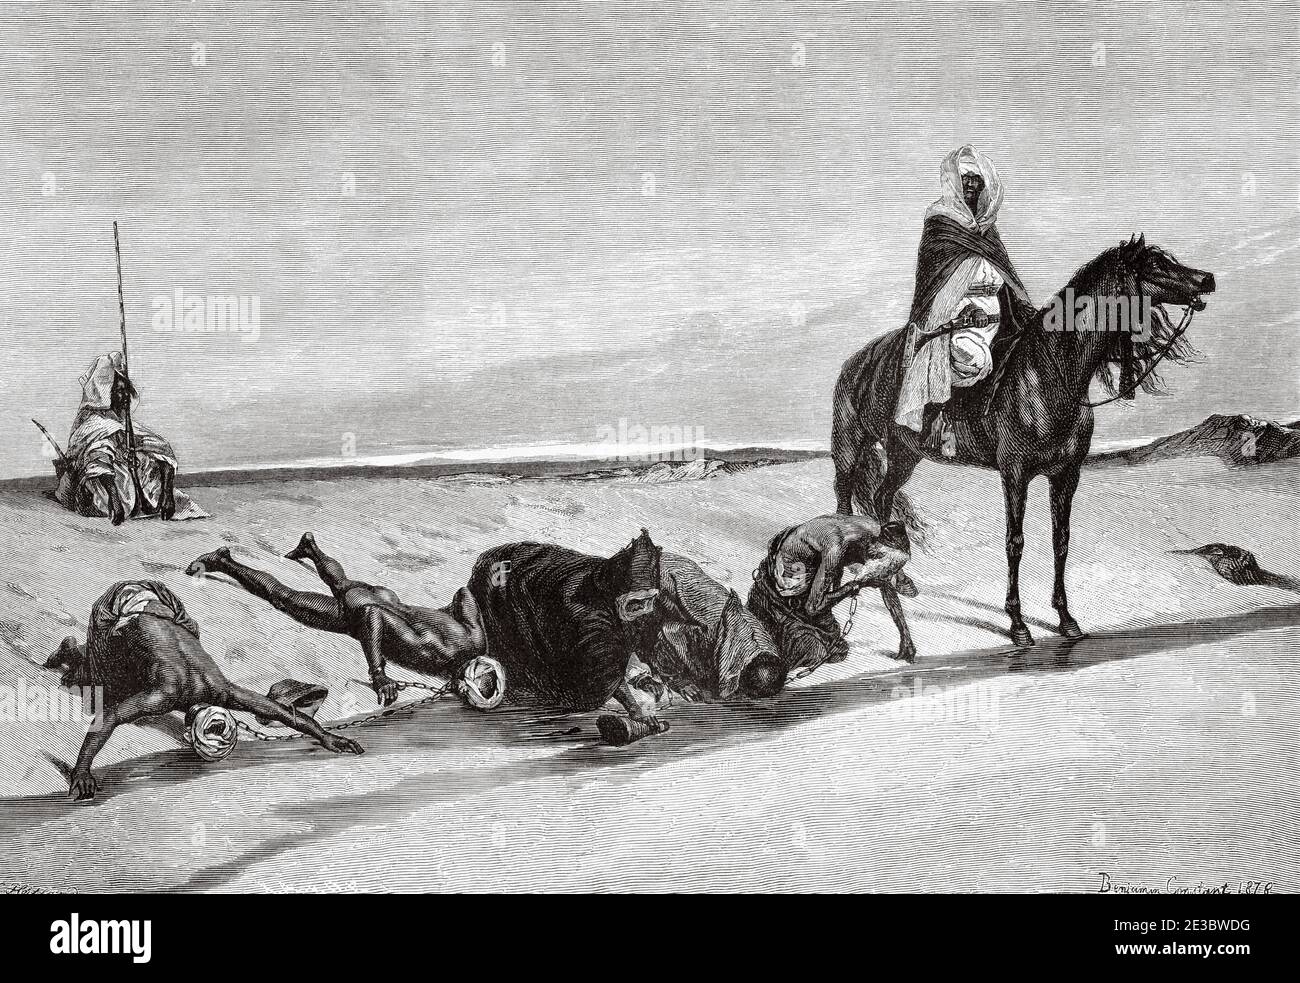 Slave caravan with camels during a rest stop, Great Desert of Sahara, Africa. Old 19th century engraved illustration, El Mundo Ilustrado 1880 Stock Photo